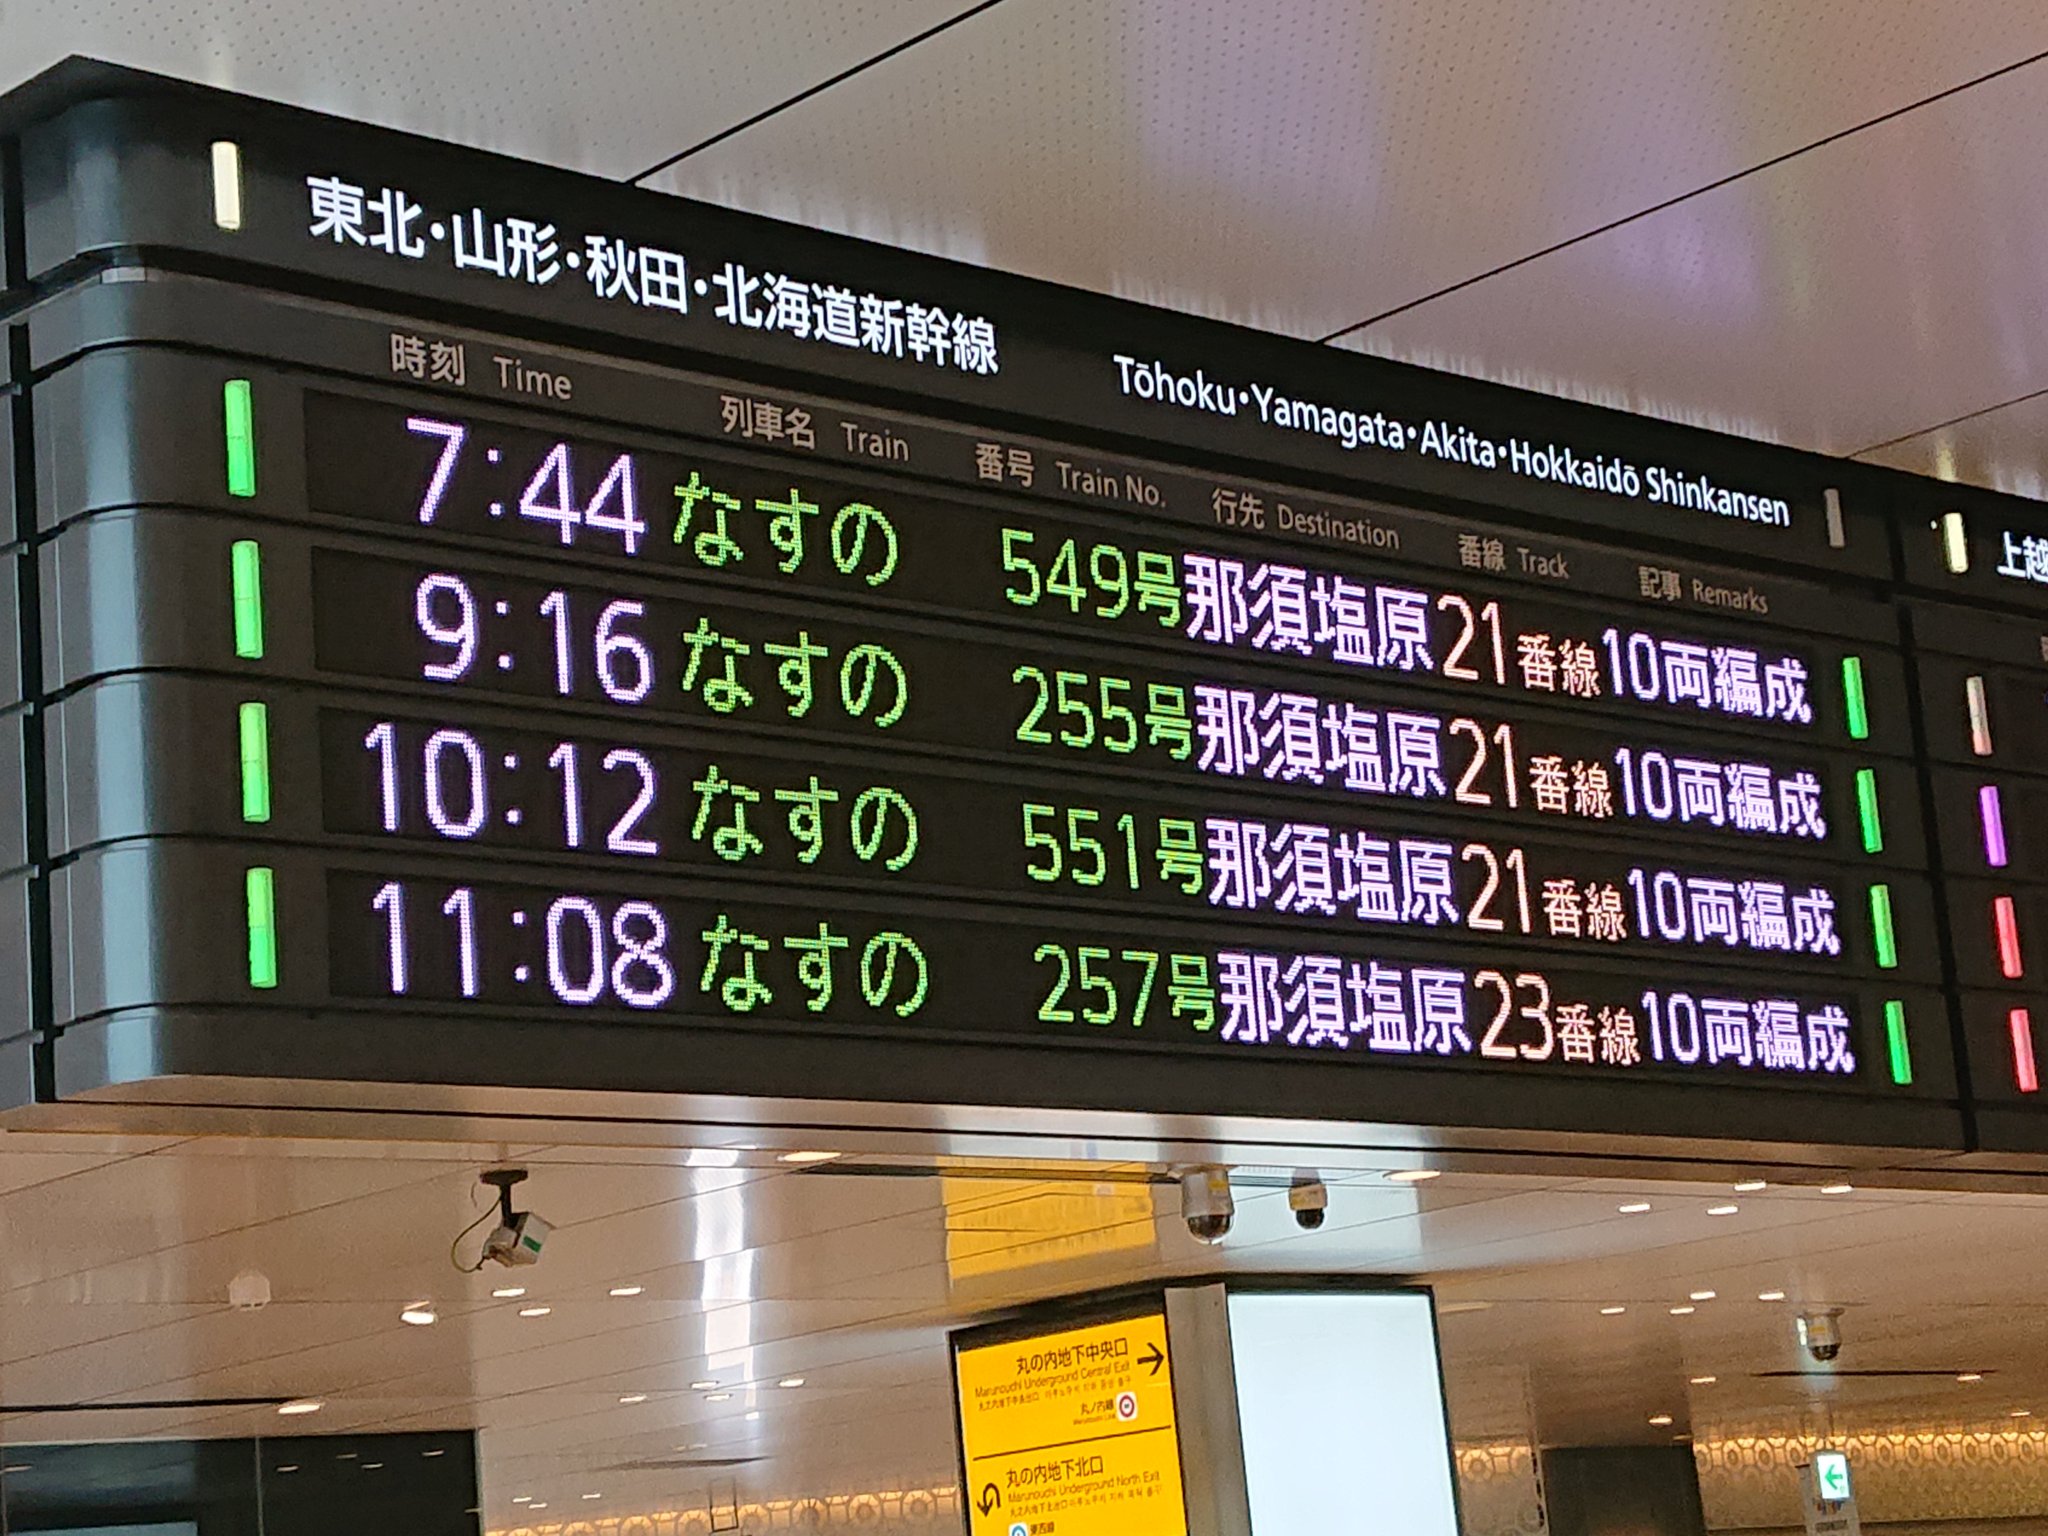 【JR東日本】仙台地区の運転計画 在来線は昼頃まで全線運休 新幹線は再開目処立たず